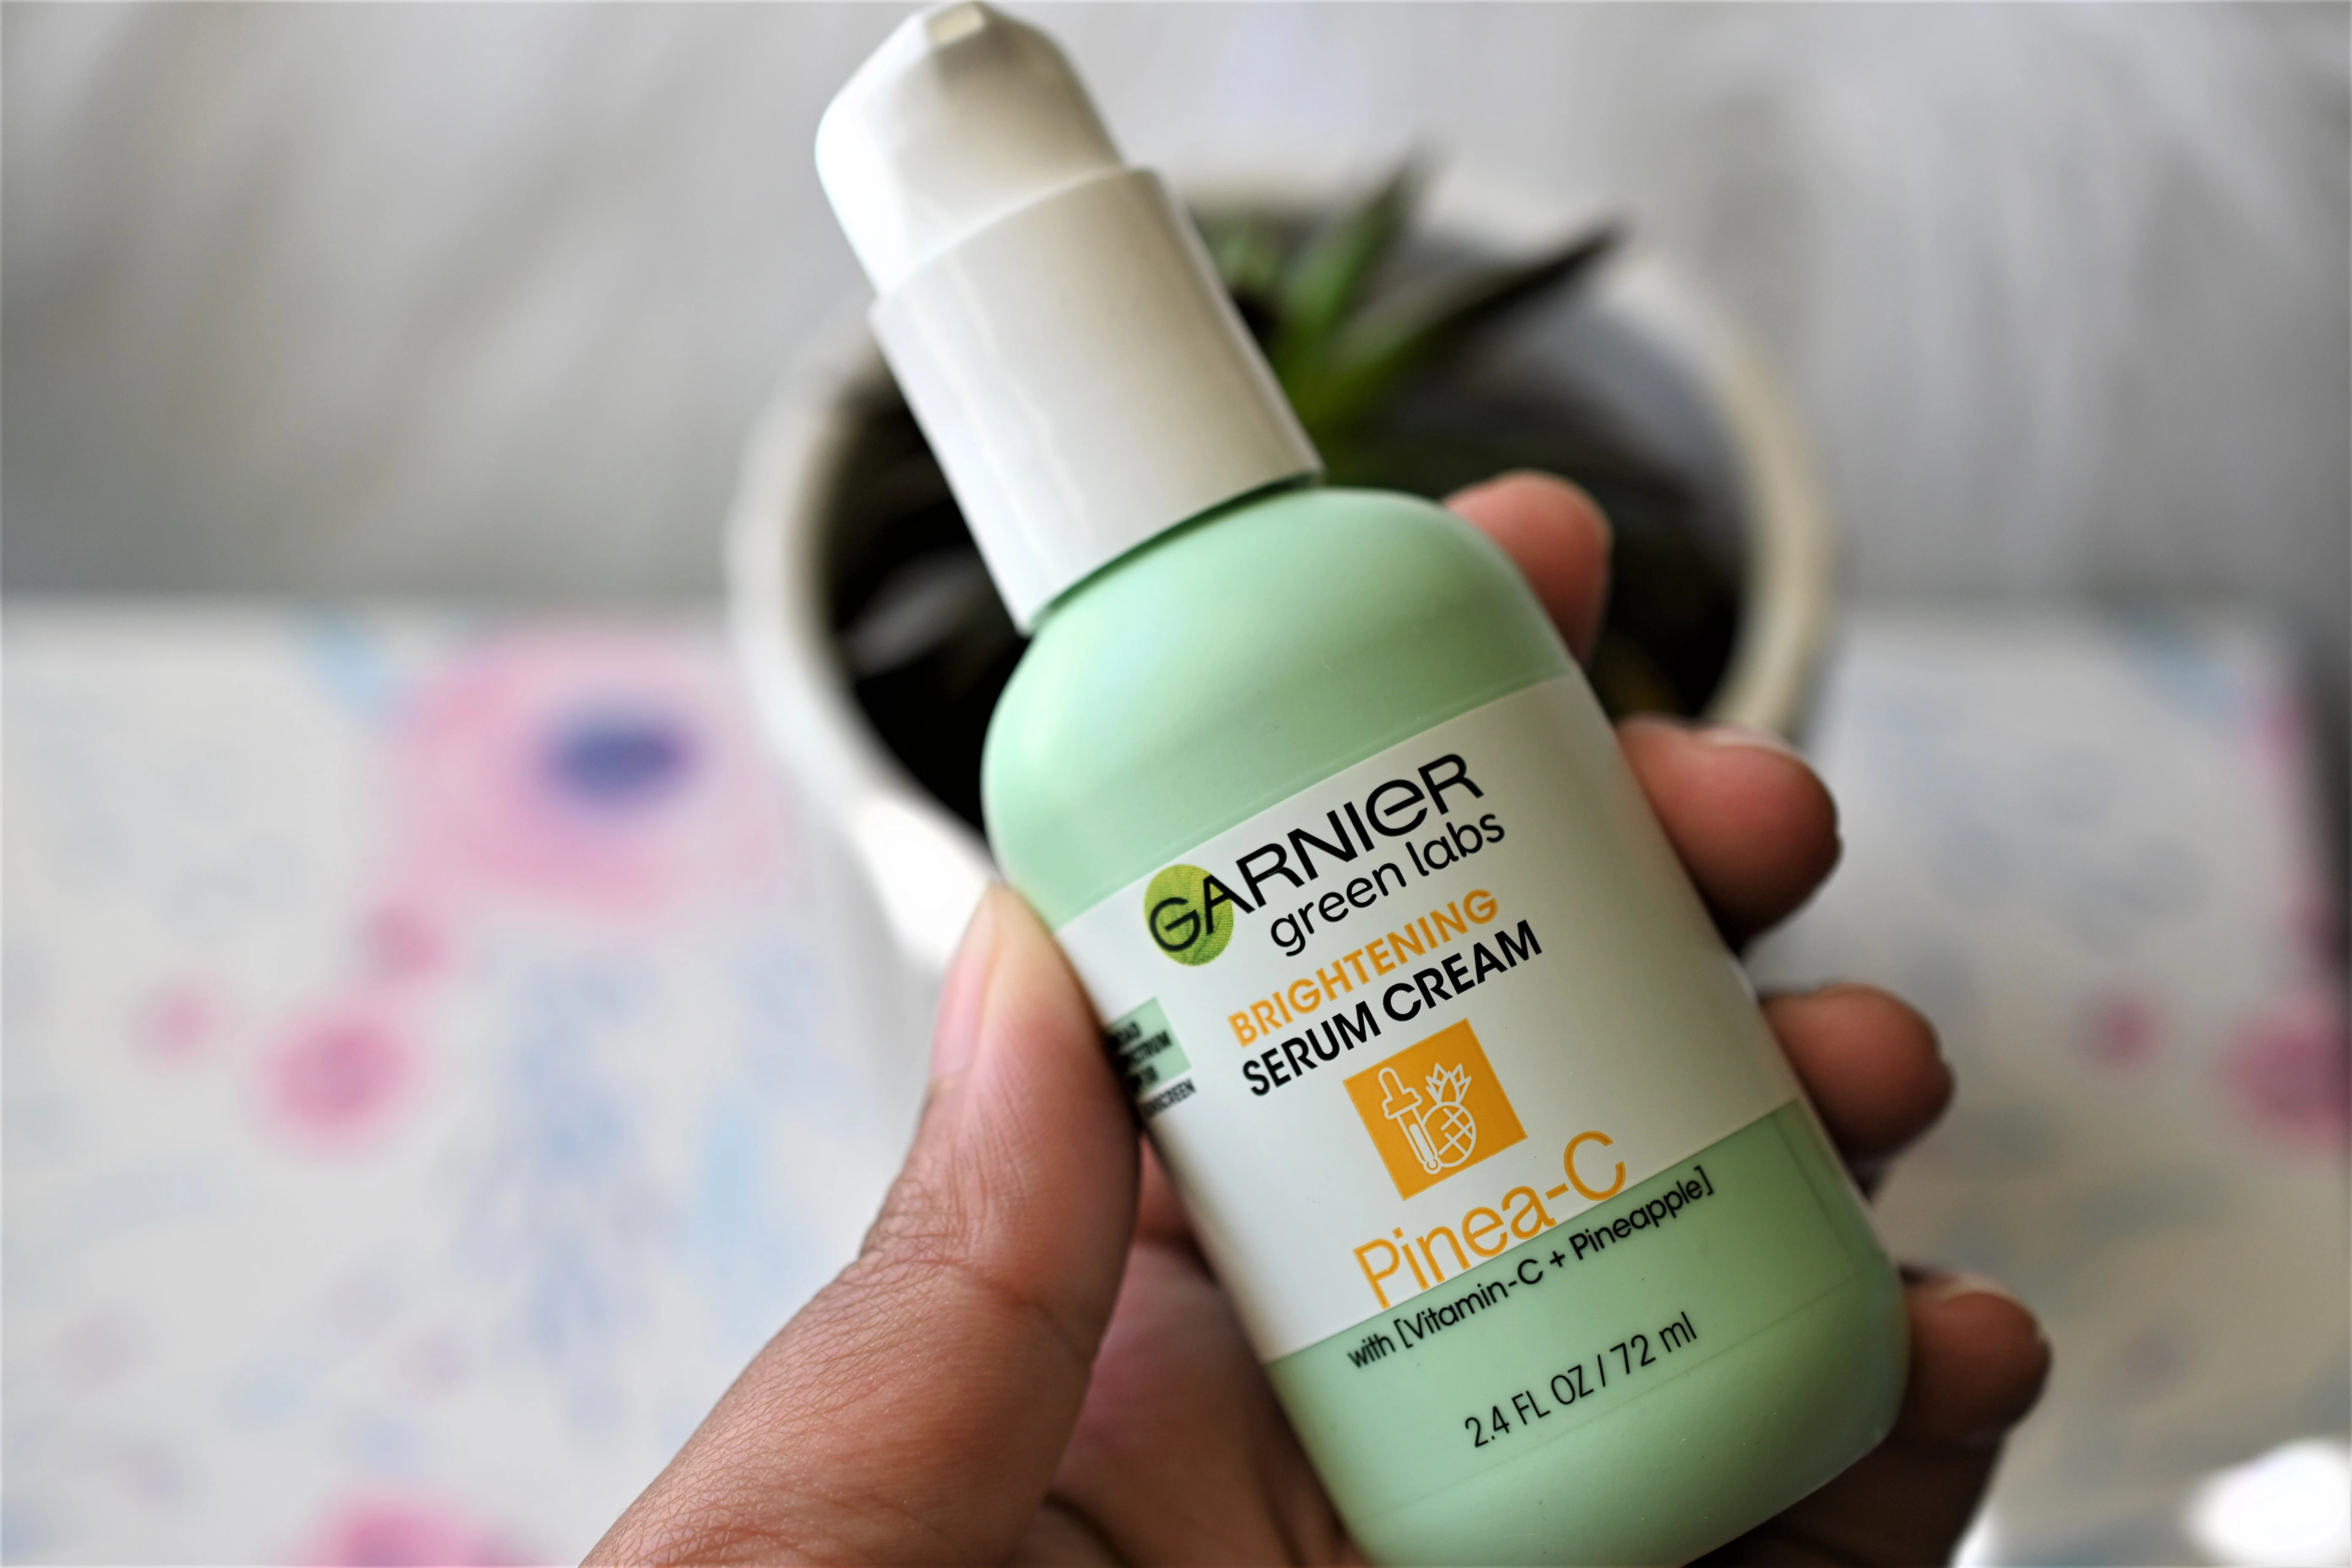 Simplify your Current Skincare Routine with Garnier Green Labs Brightening Serum Cream